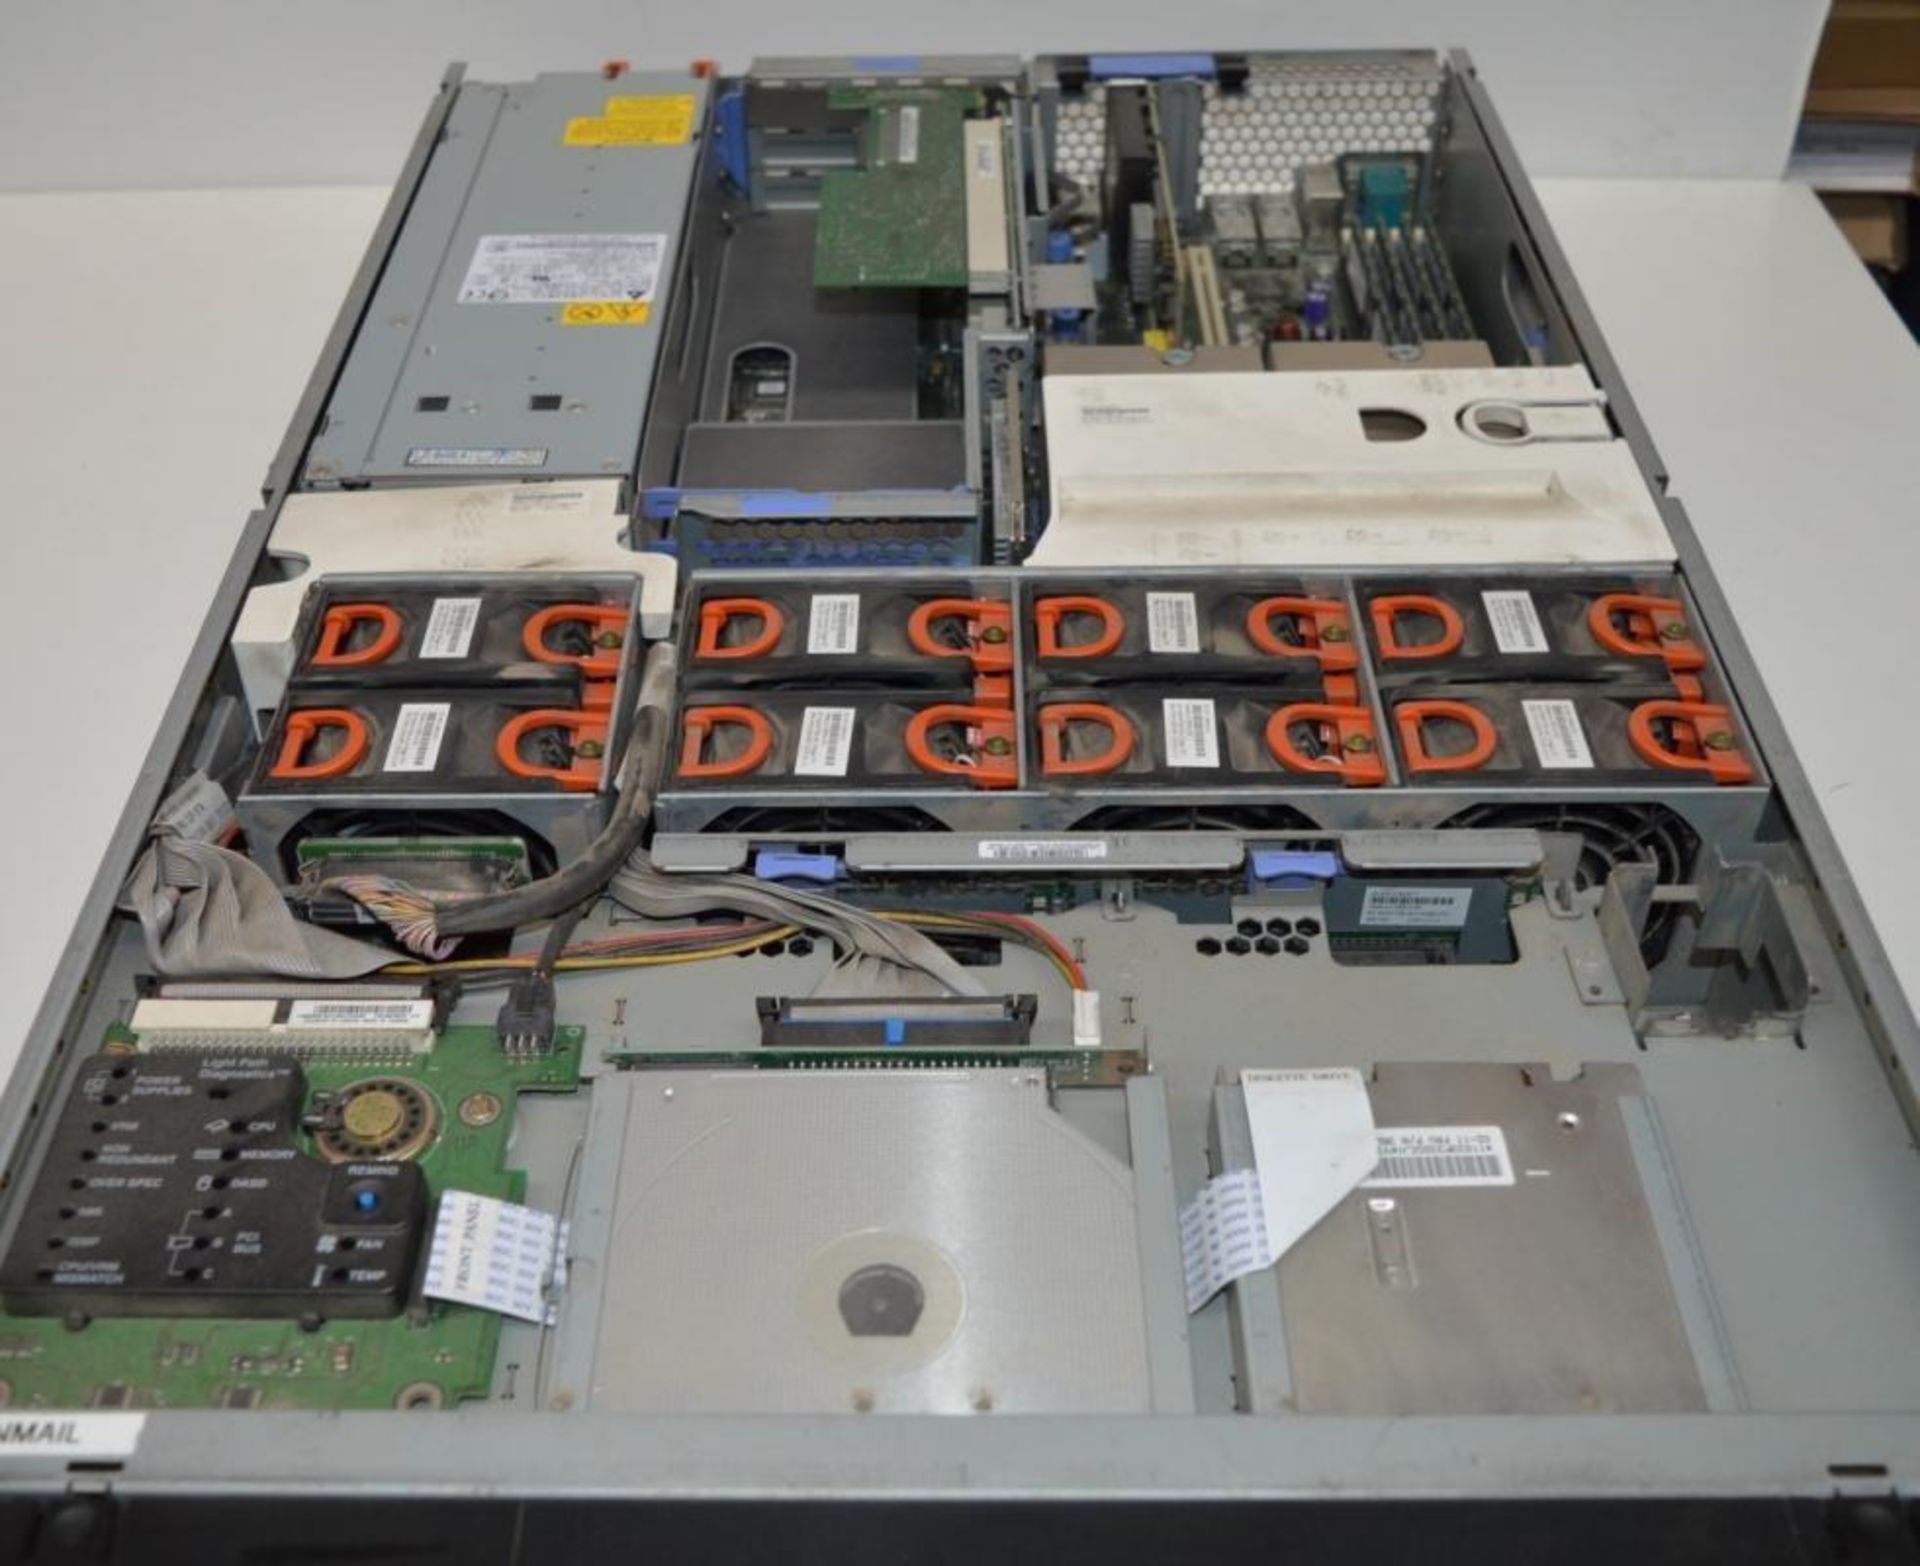 1 x IBM xSeries 345 Server - Includes Dual Xeon Processors, 1gb Ram, Raid Card - Hard Disk Drives - Image 4 of 6